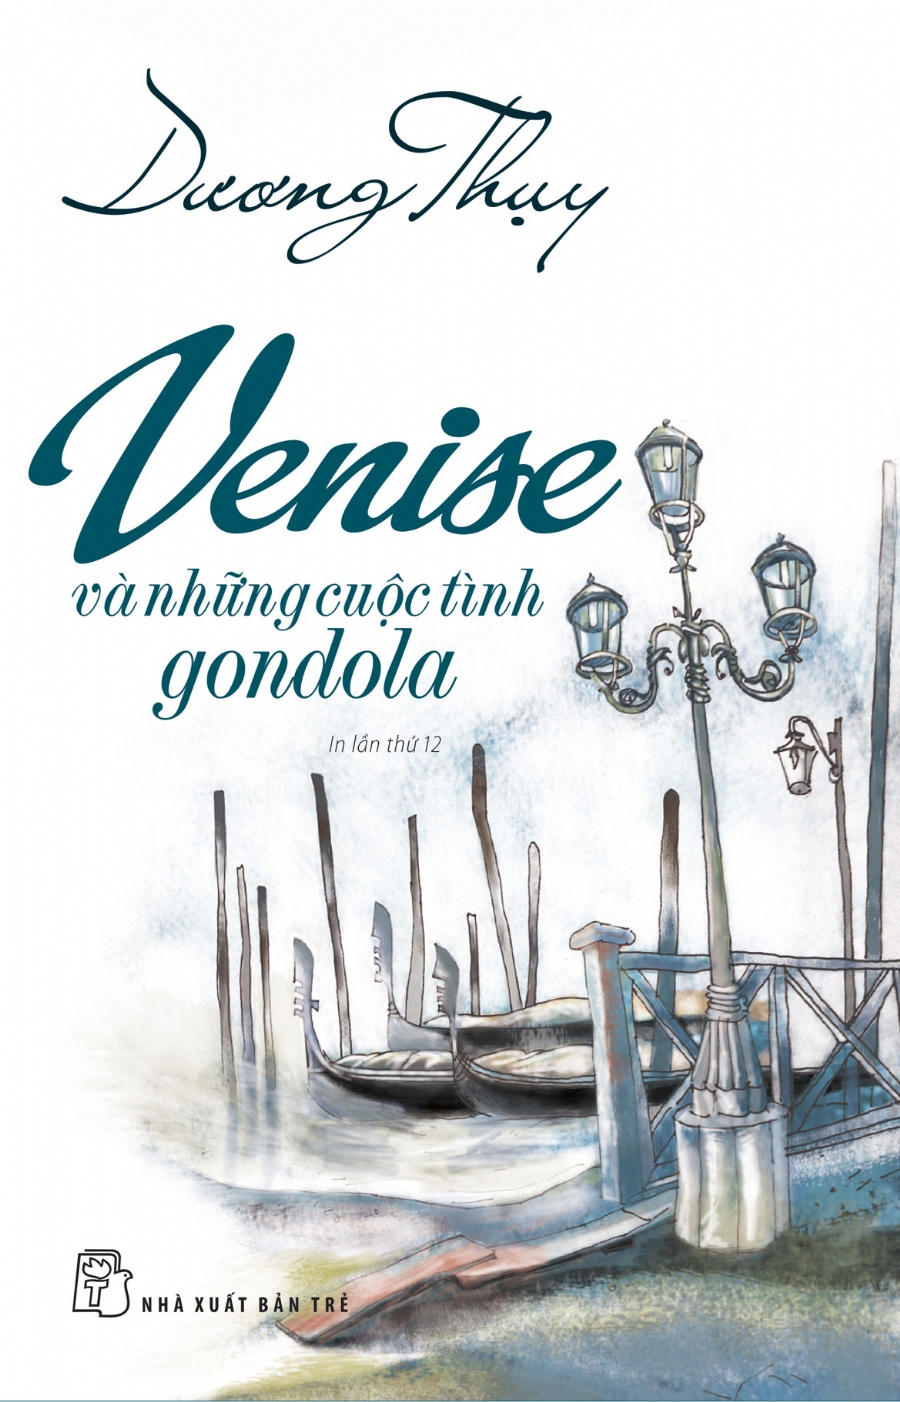 Venise va nhung cuoc tinh gondola